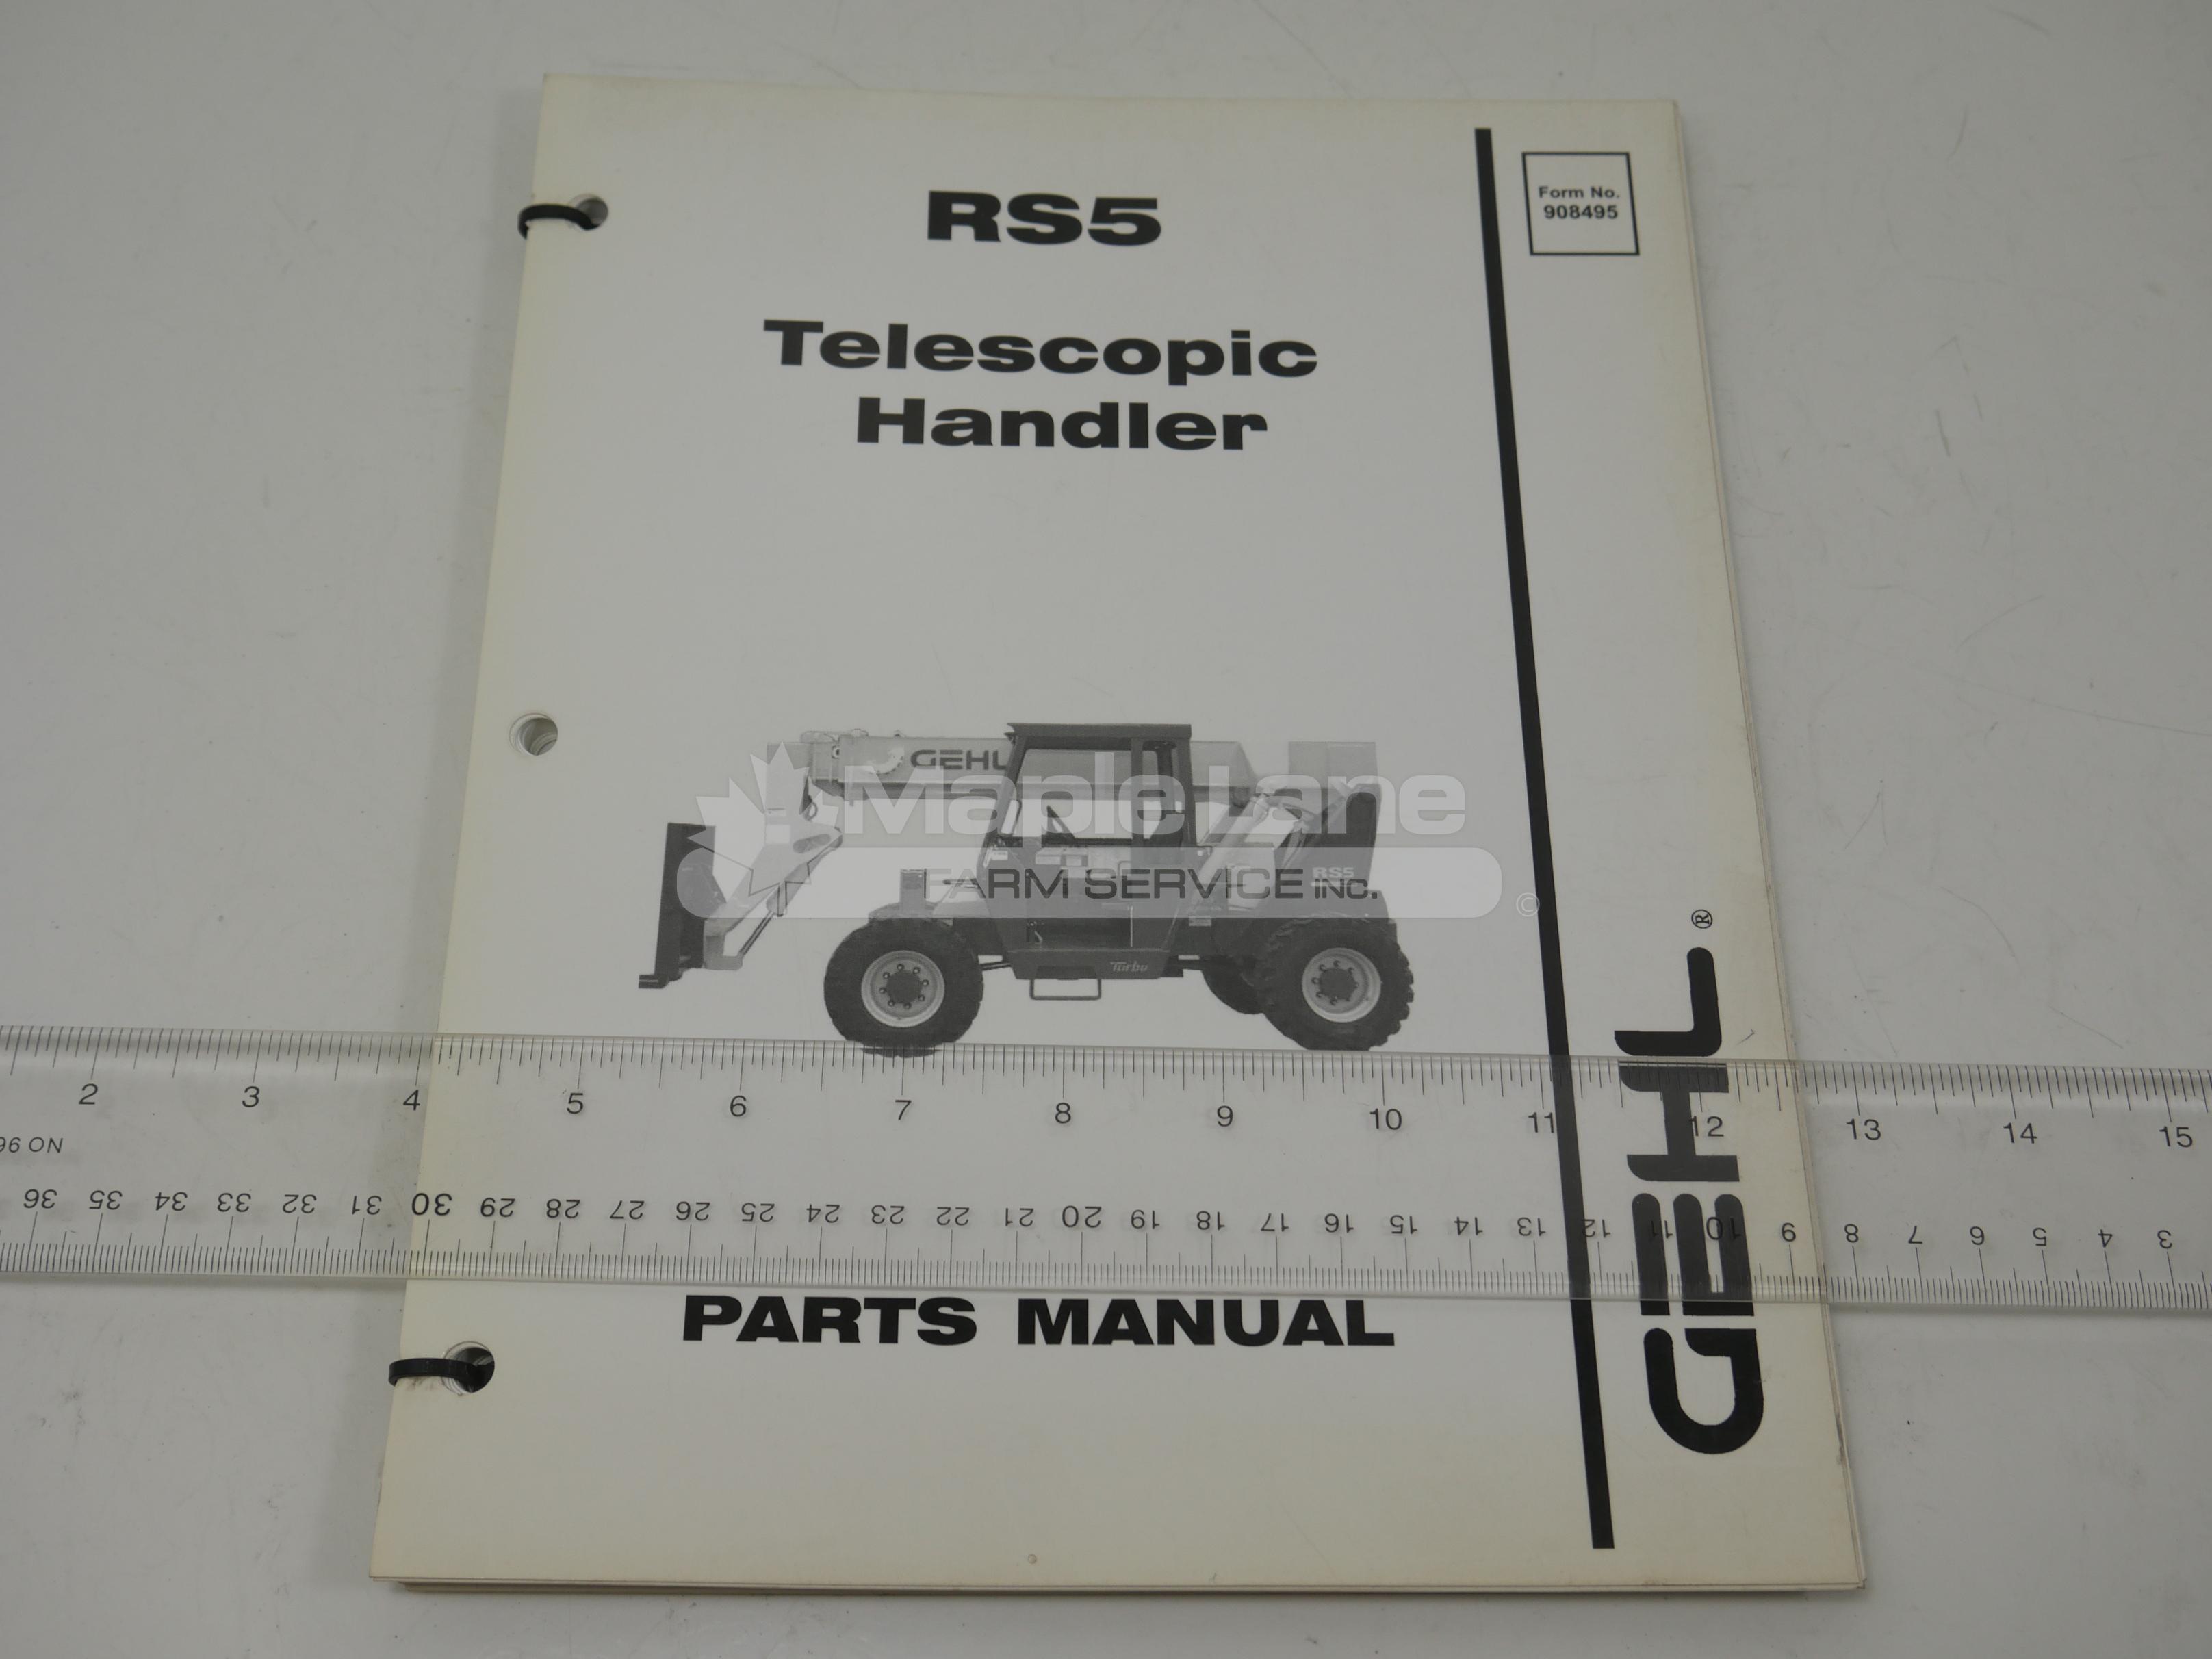 908495 Parts Manual